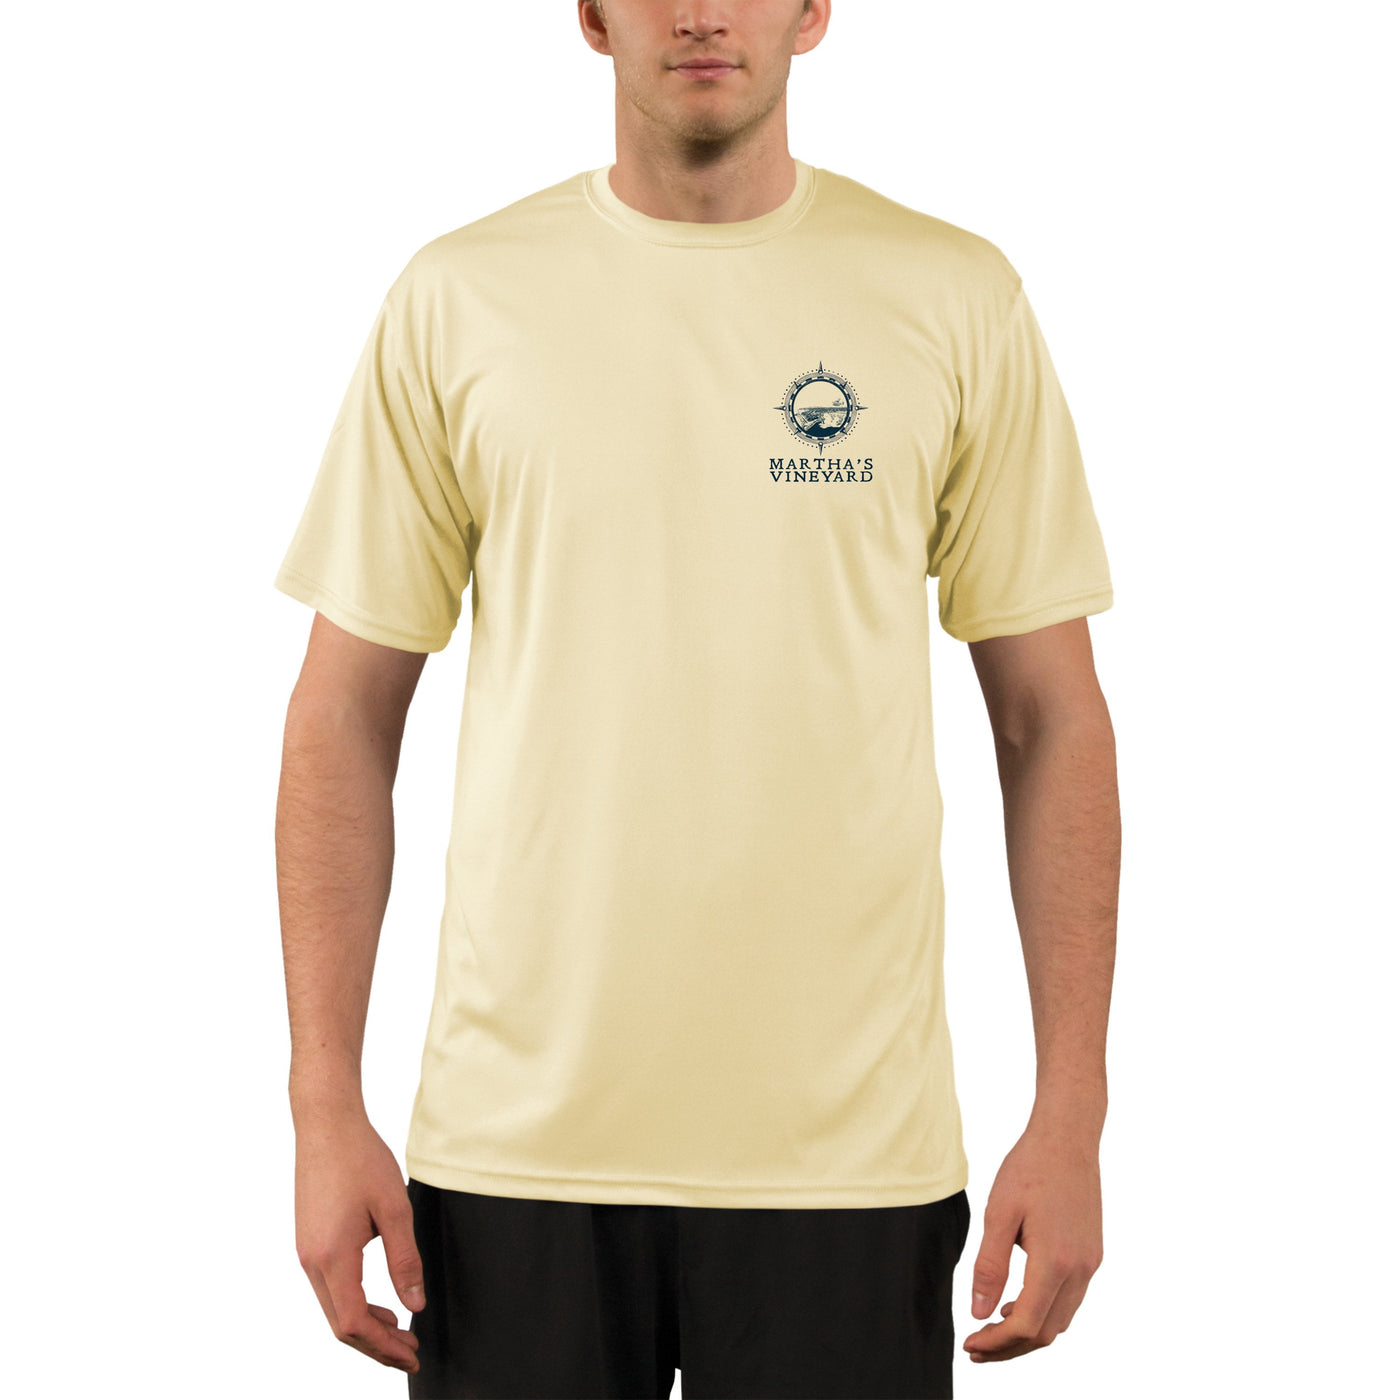 Compass Vintage Marthas Vineyard Men's UPF 50+ Short Sleeve T-shirt